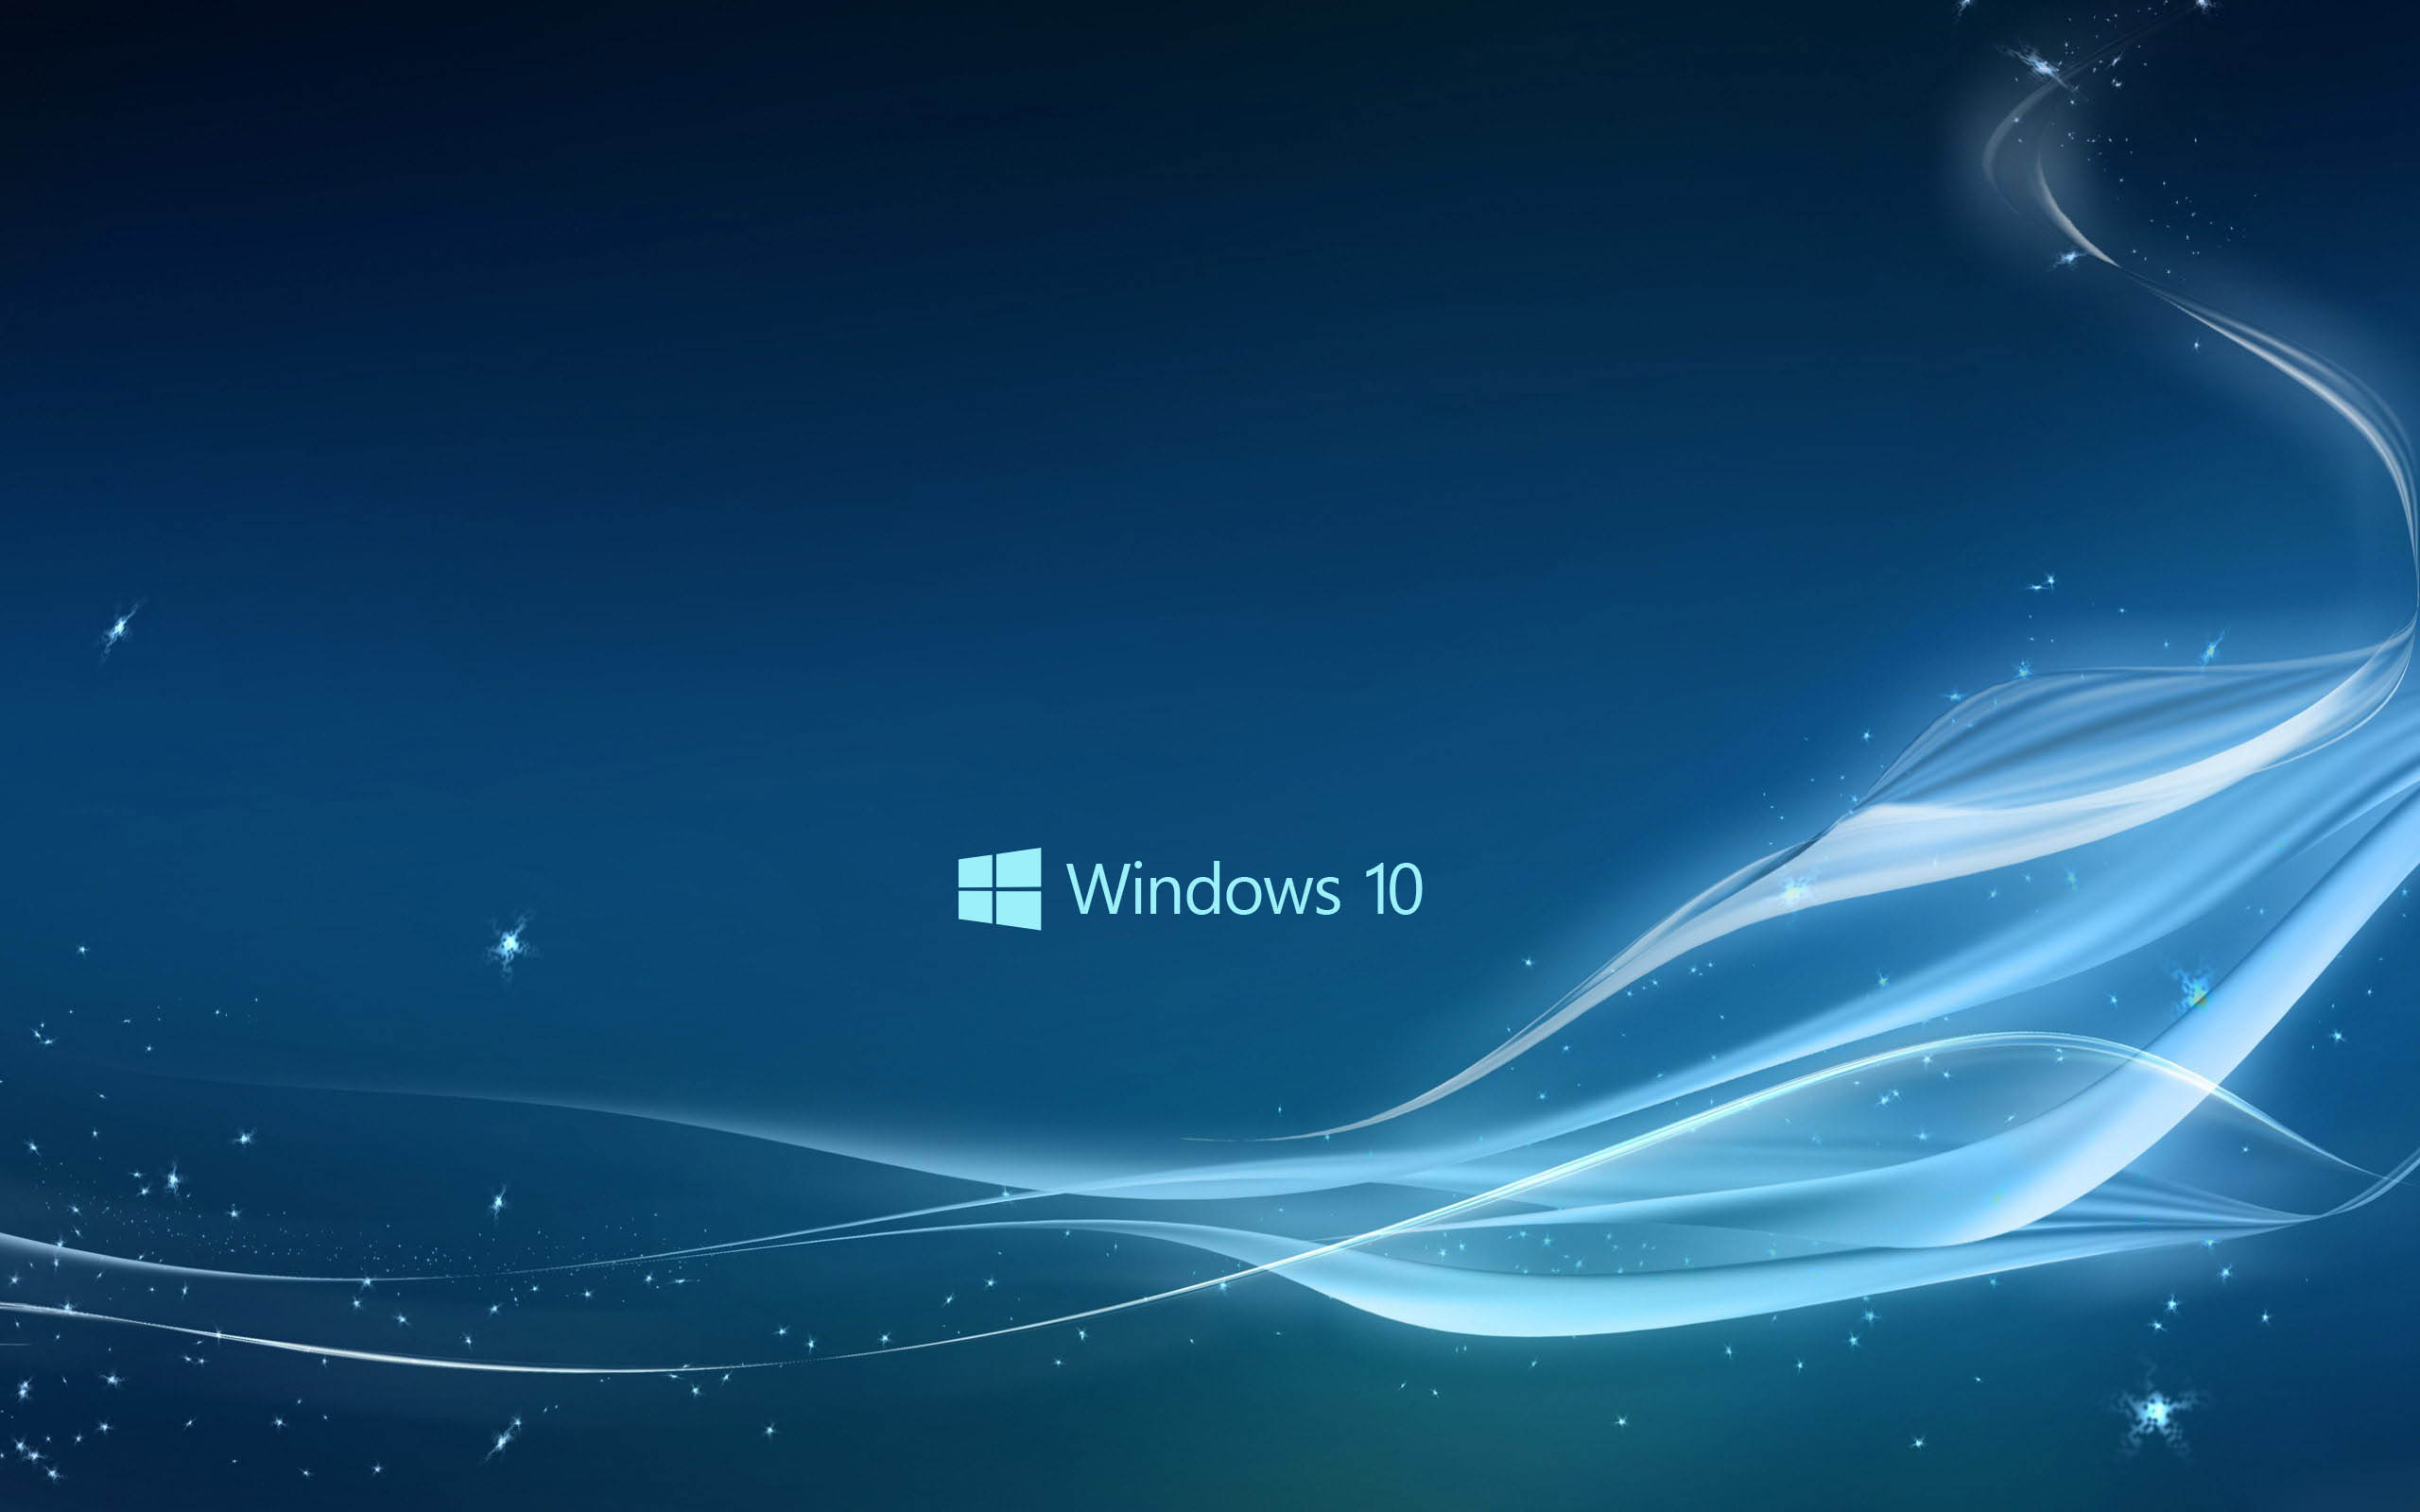 Windows 10 Wallpaper Wallpapers, Backgrounds, Images, Art Photos